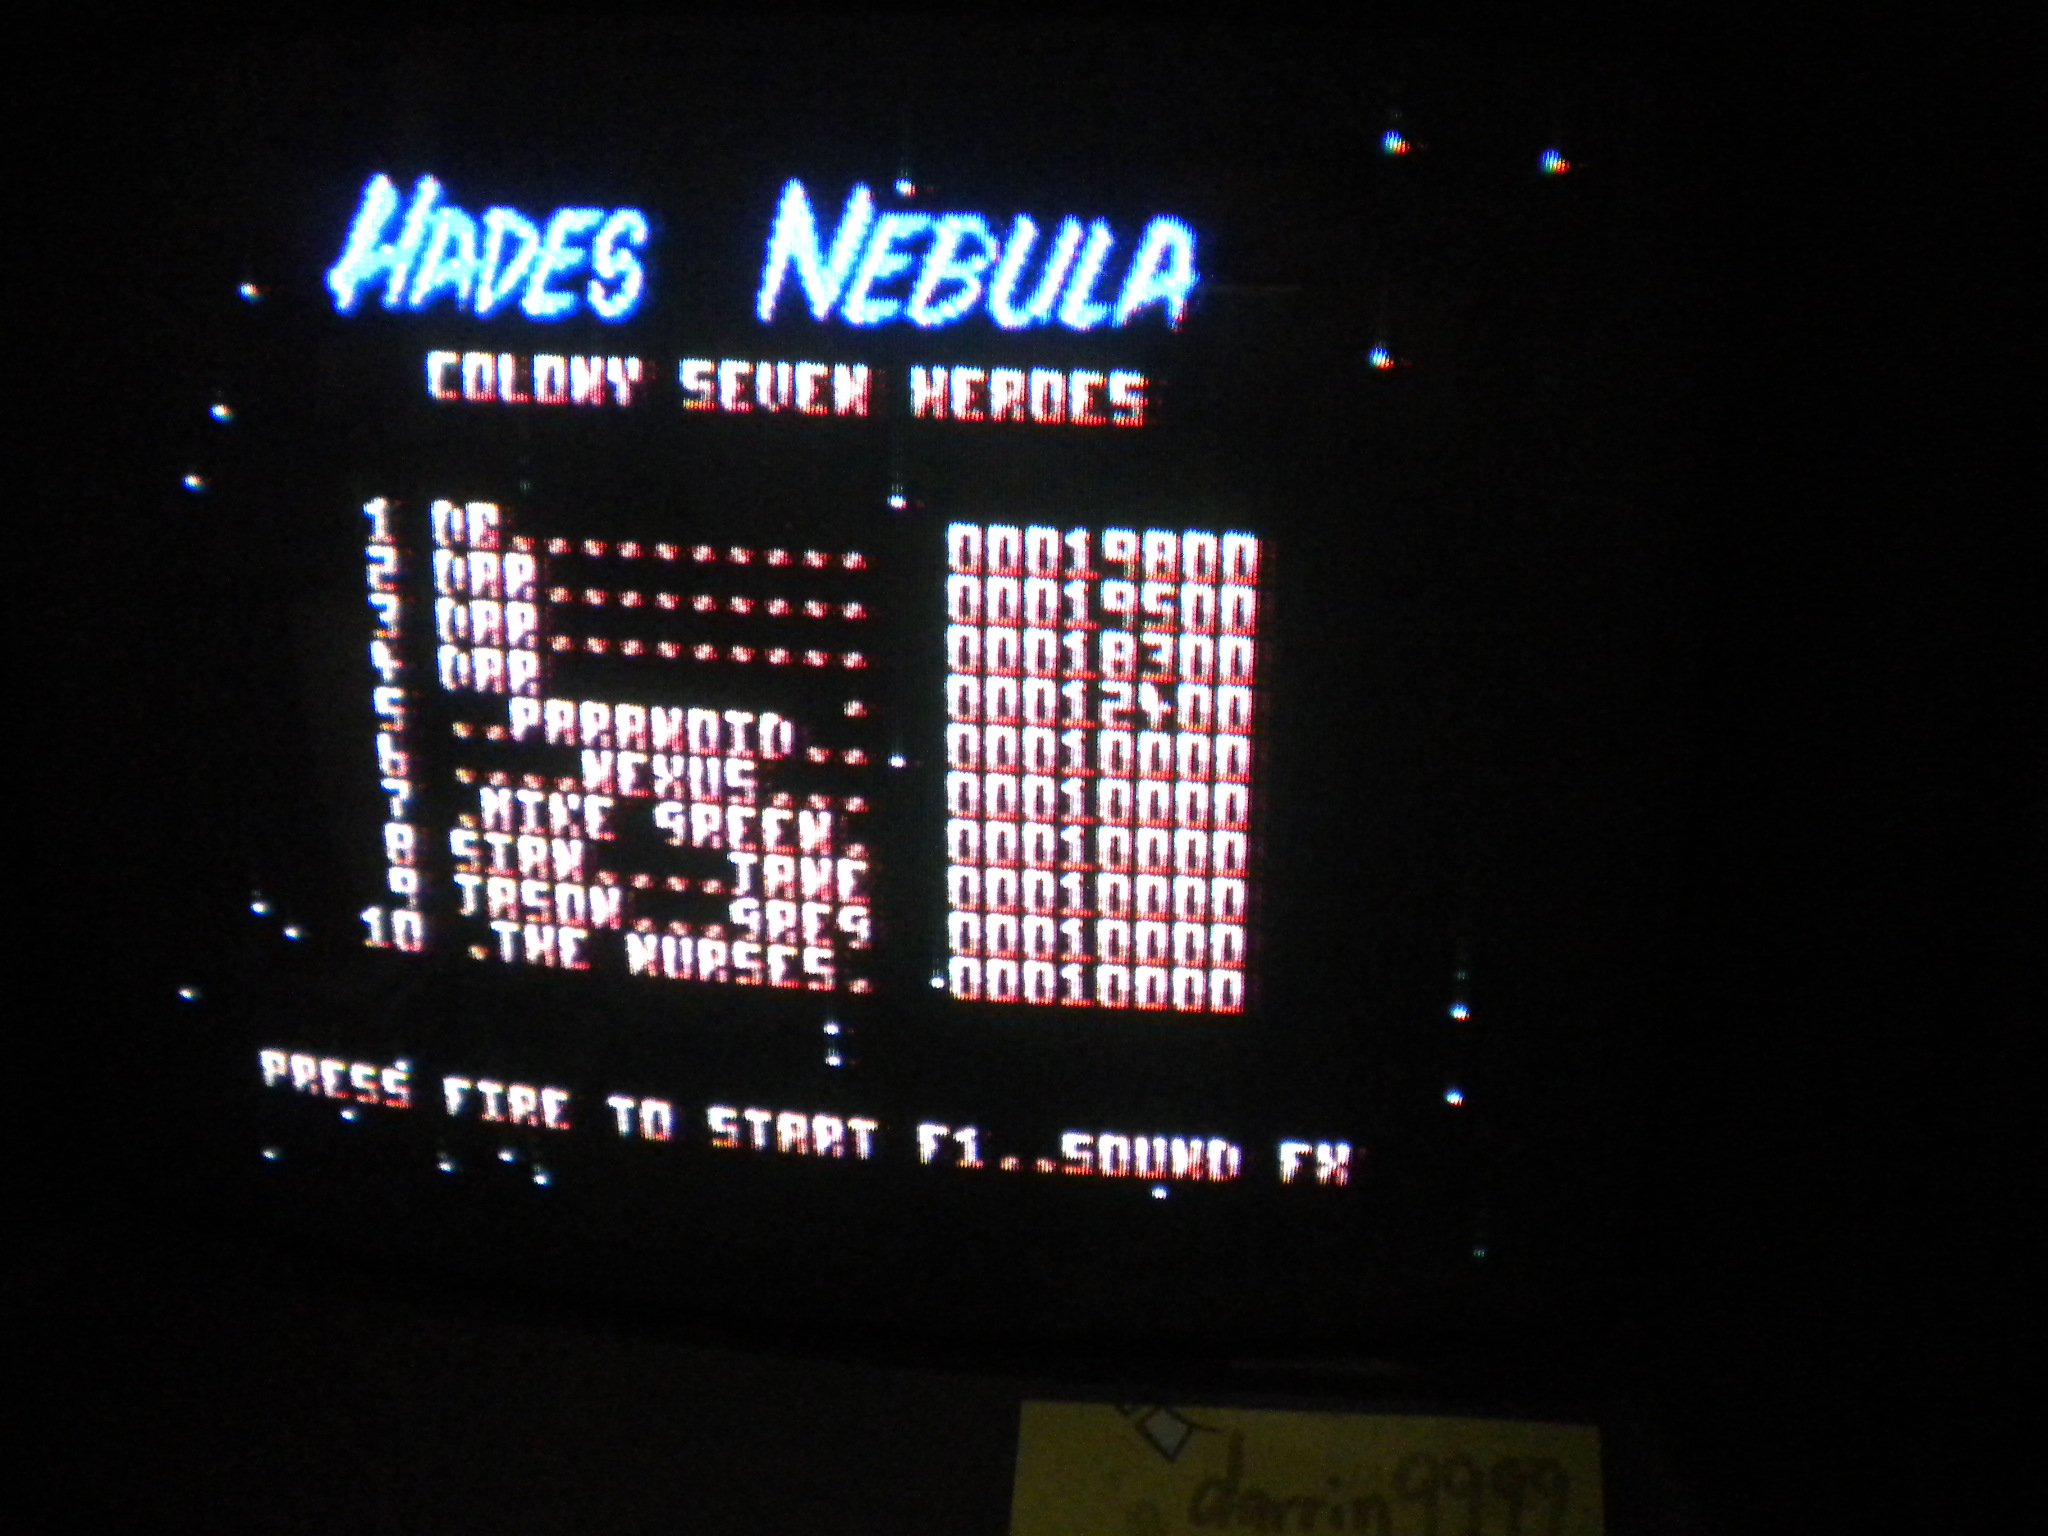 Hades Nebula 19,800 points